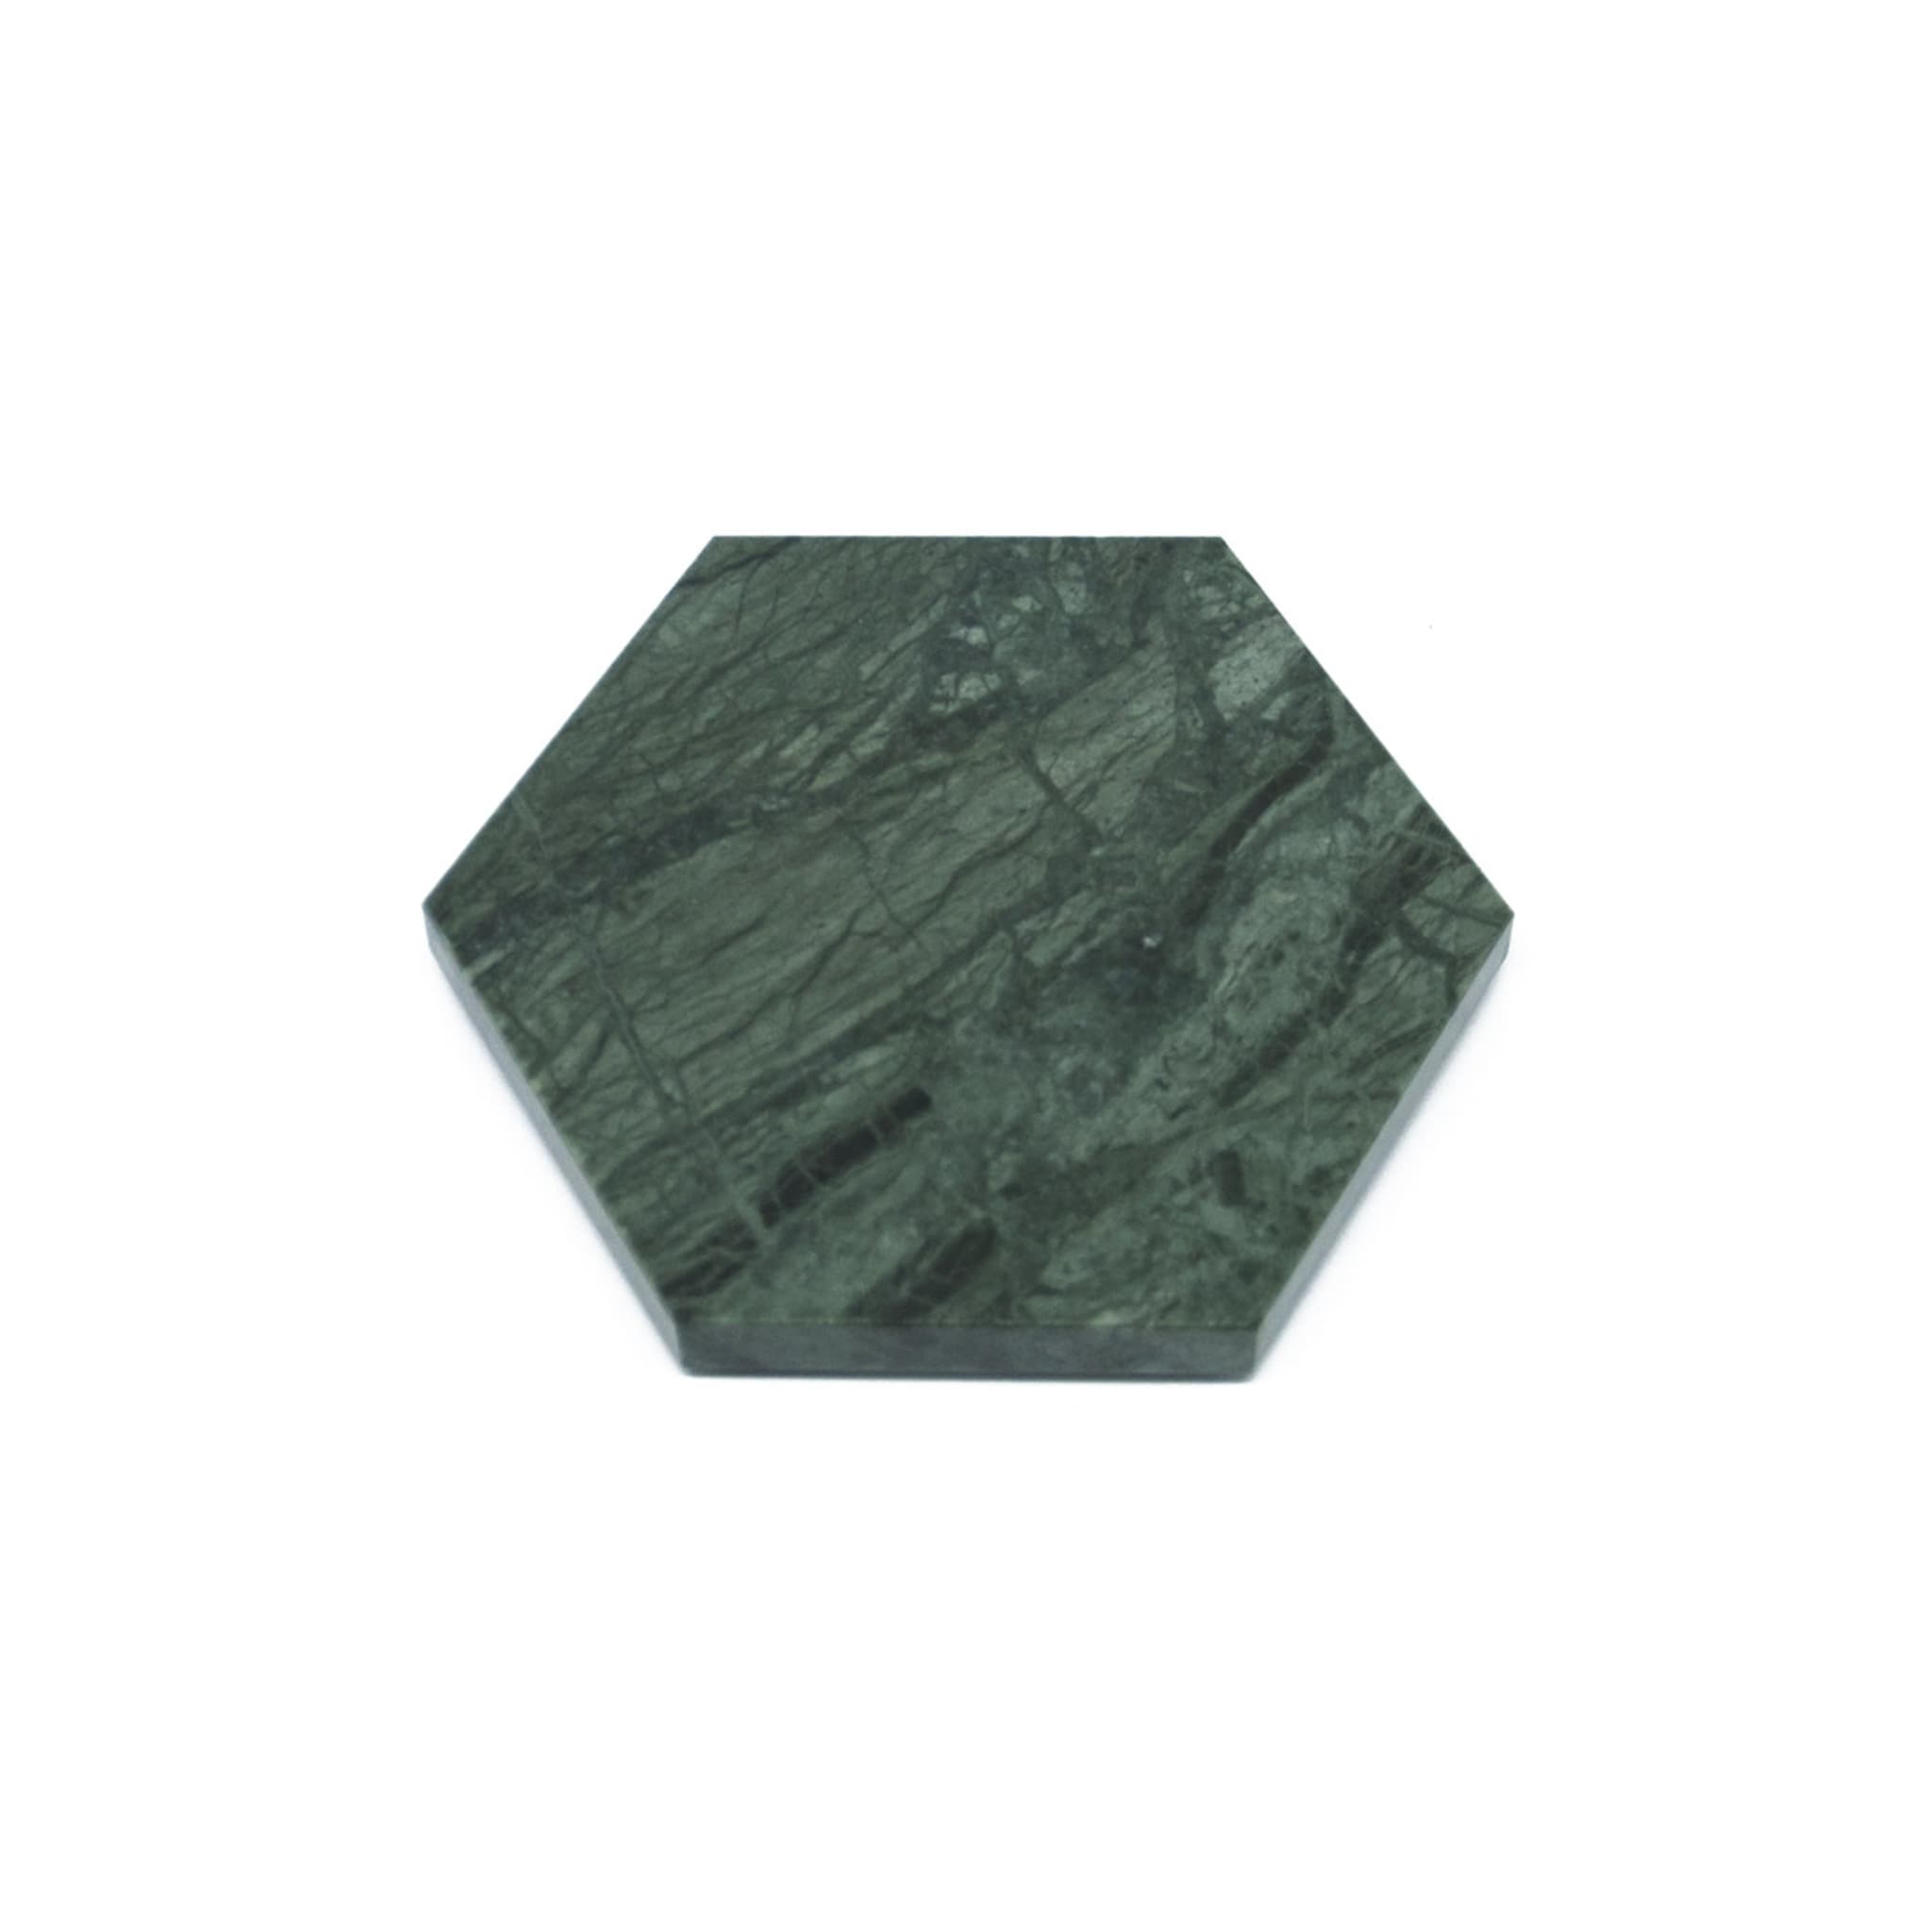 Hexagonal Green Marble Plate - Alternative view 1